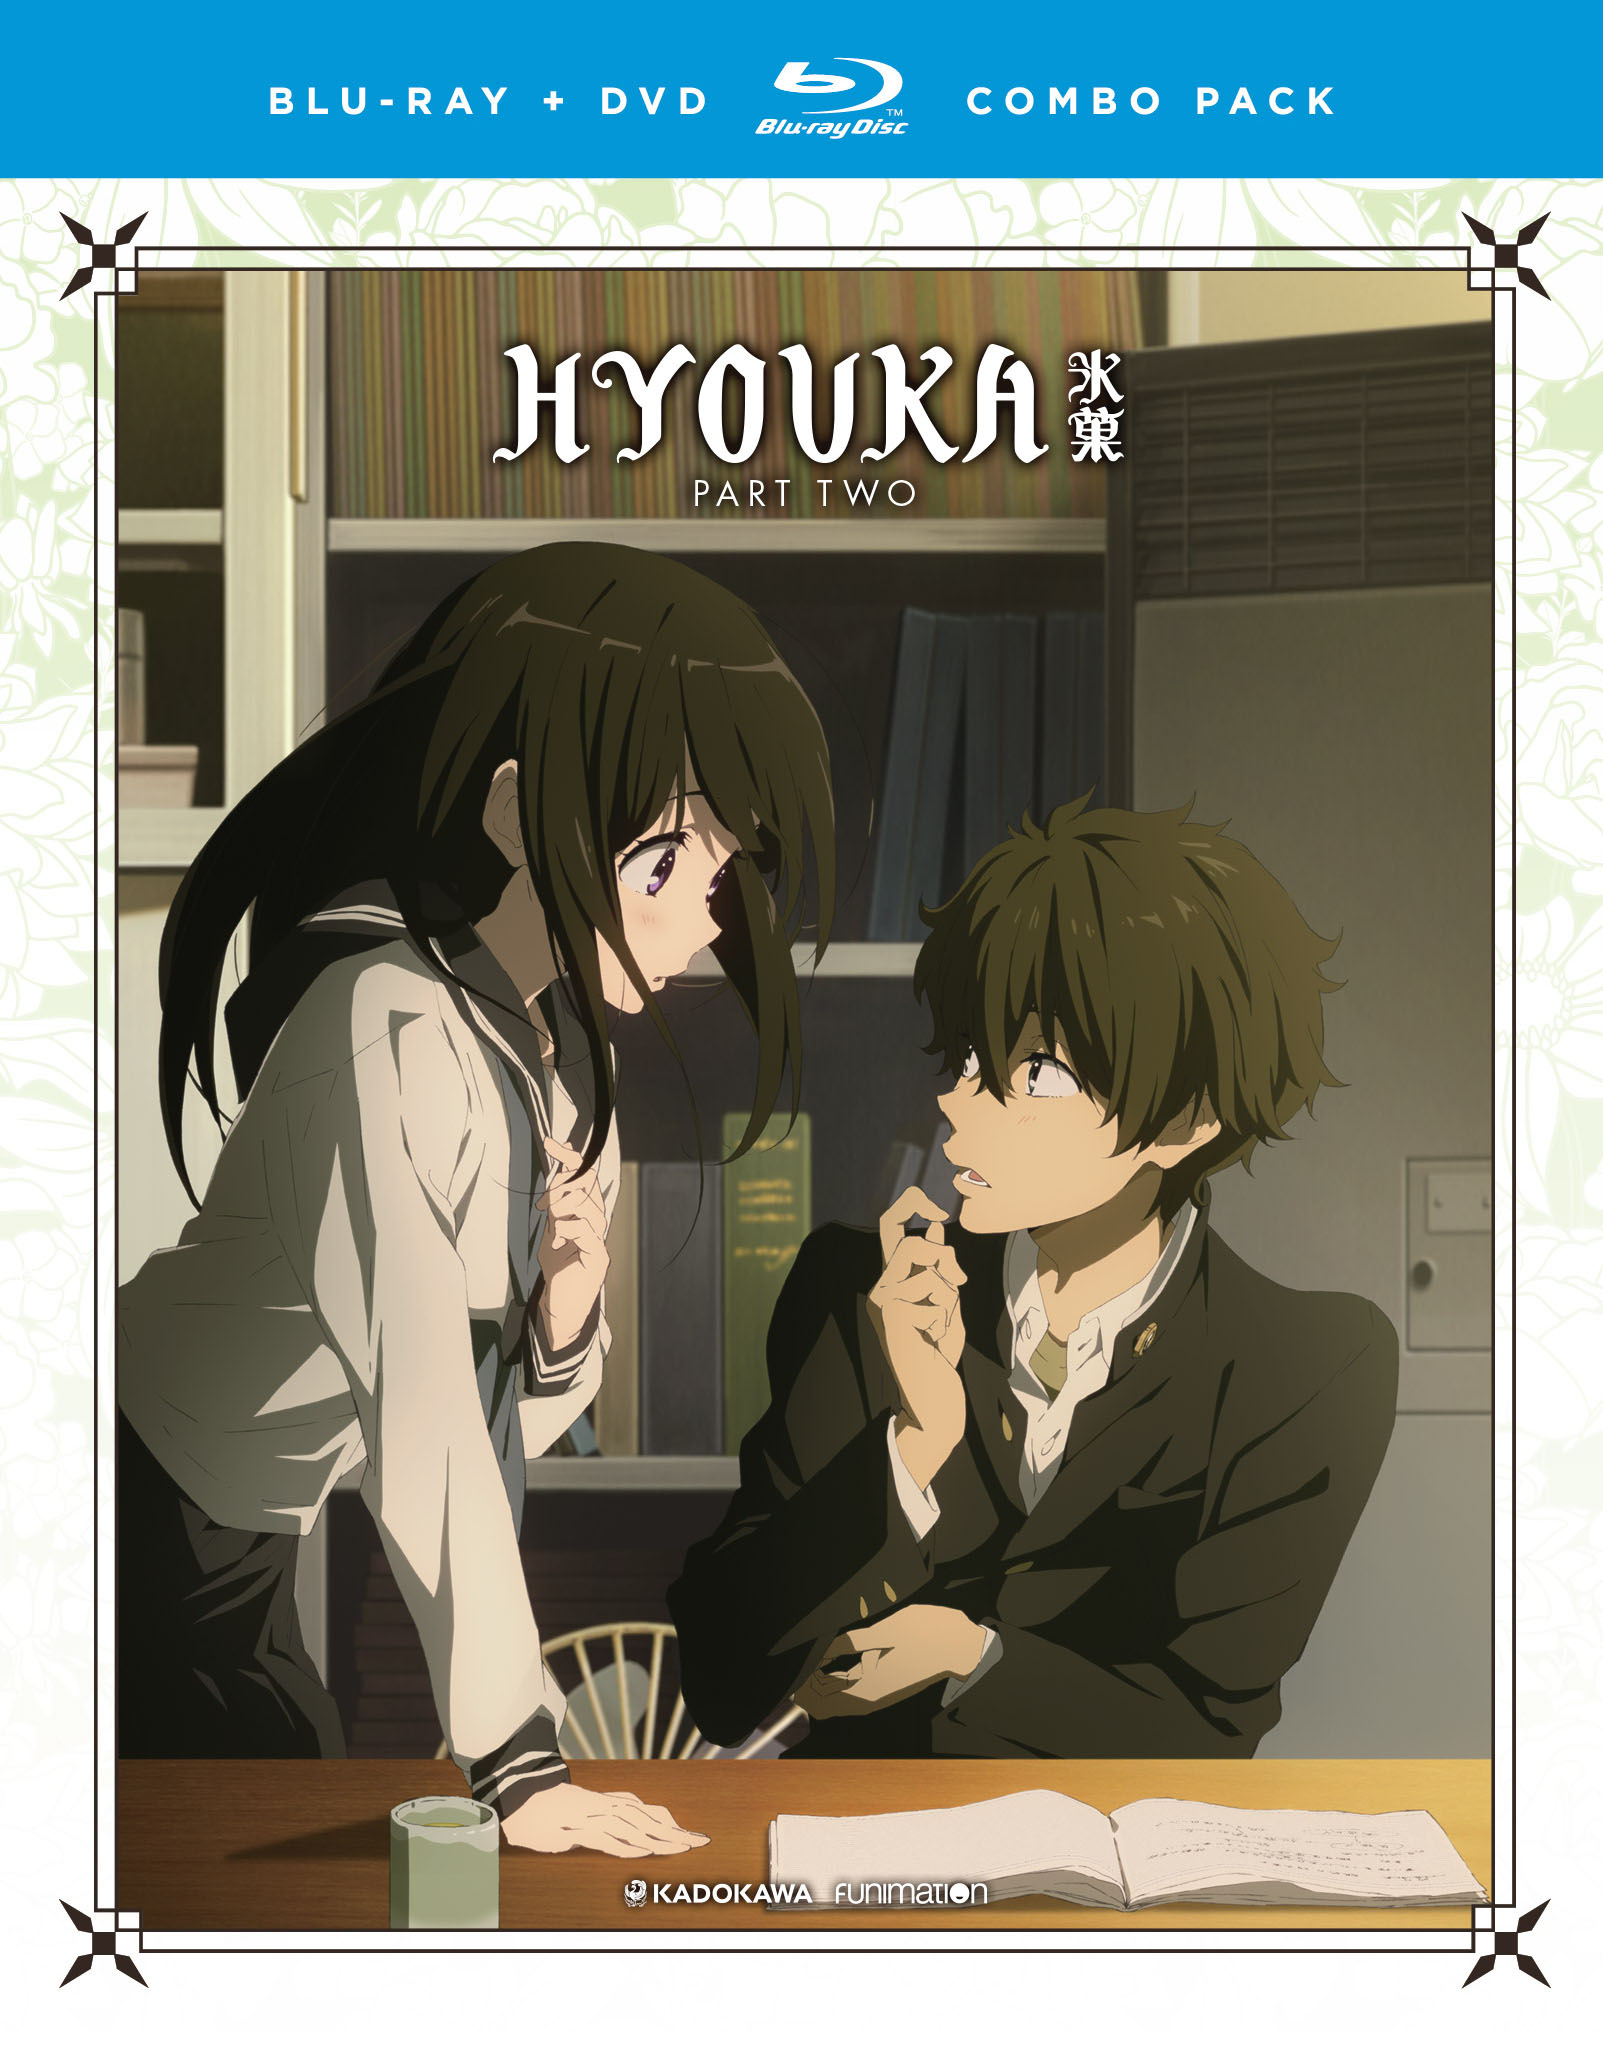 Harukana Receive: The Complete Season [Blu-ray] - Best Buy